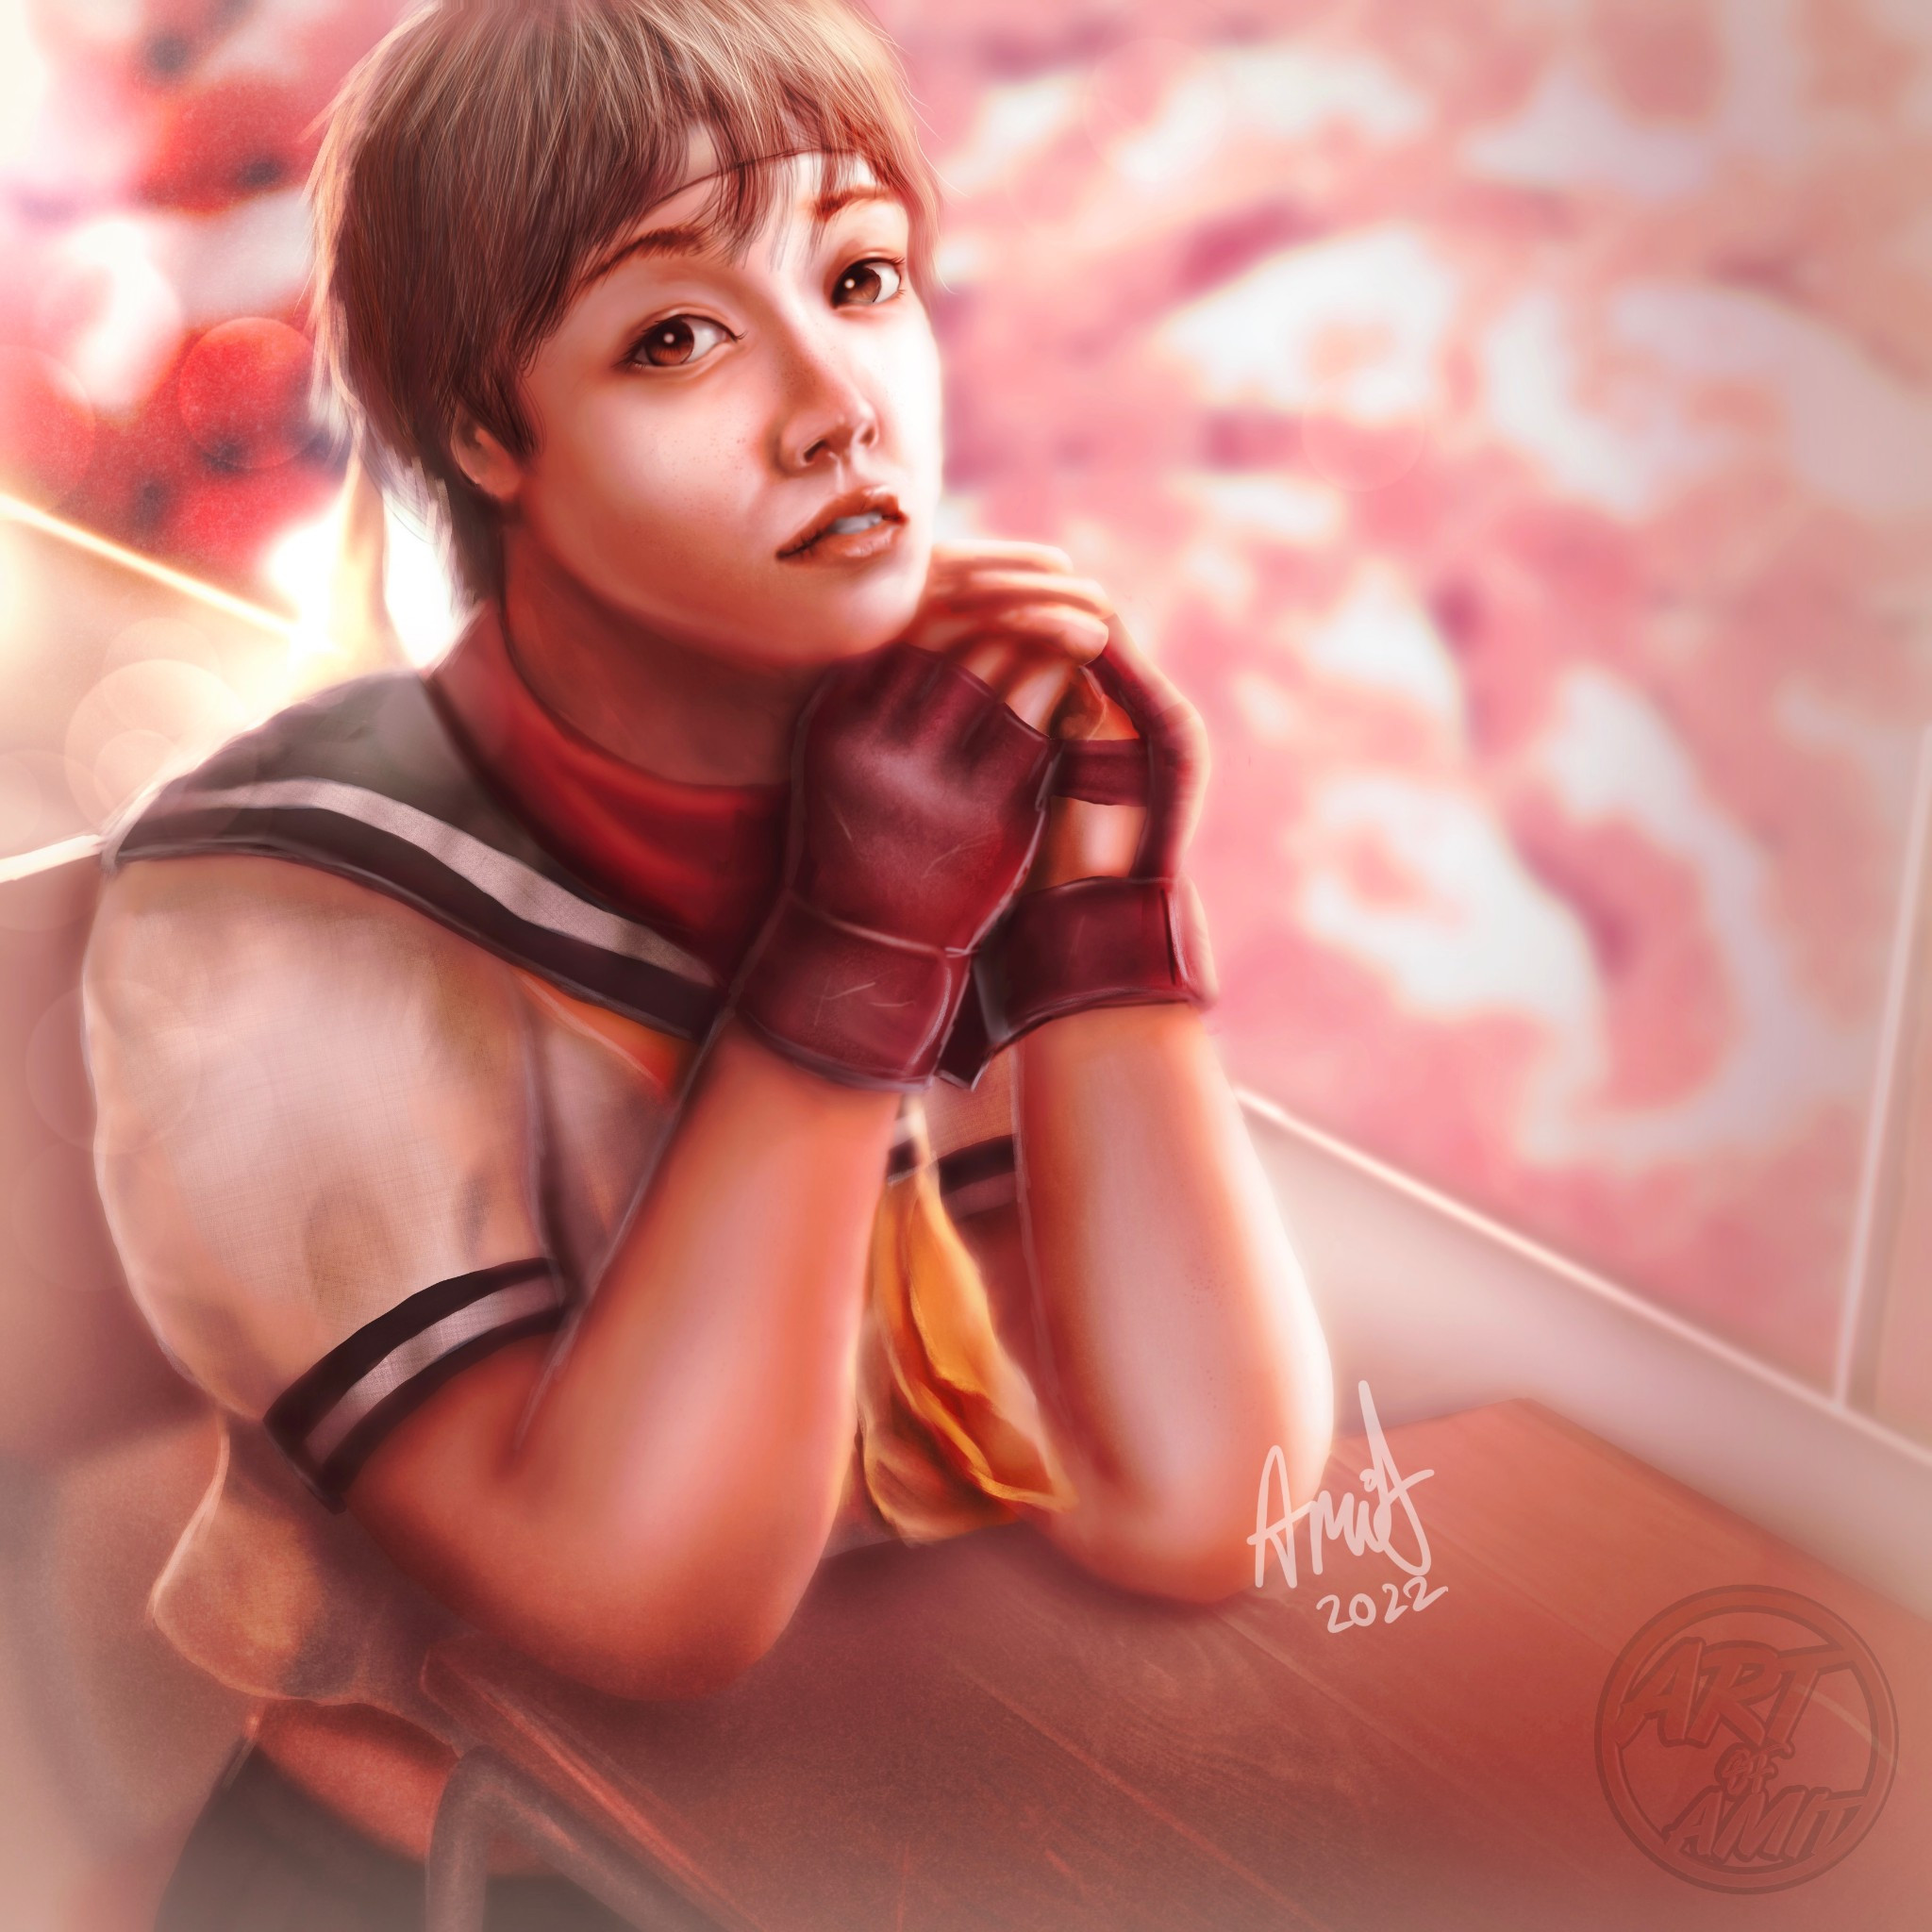 Fan art of Sakura from street fighter 